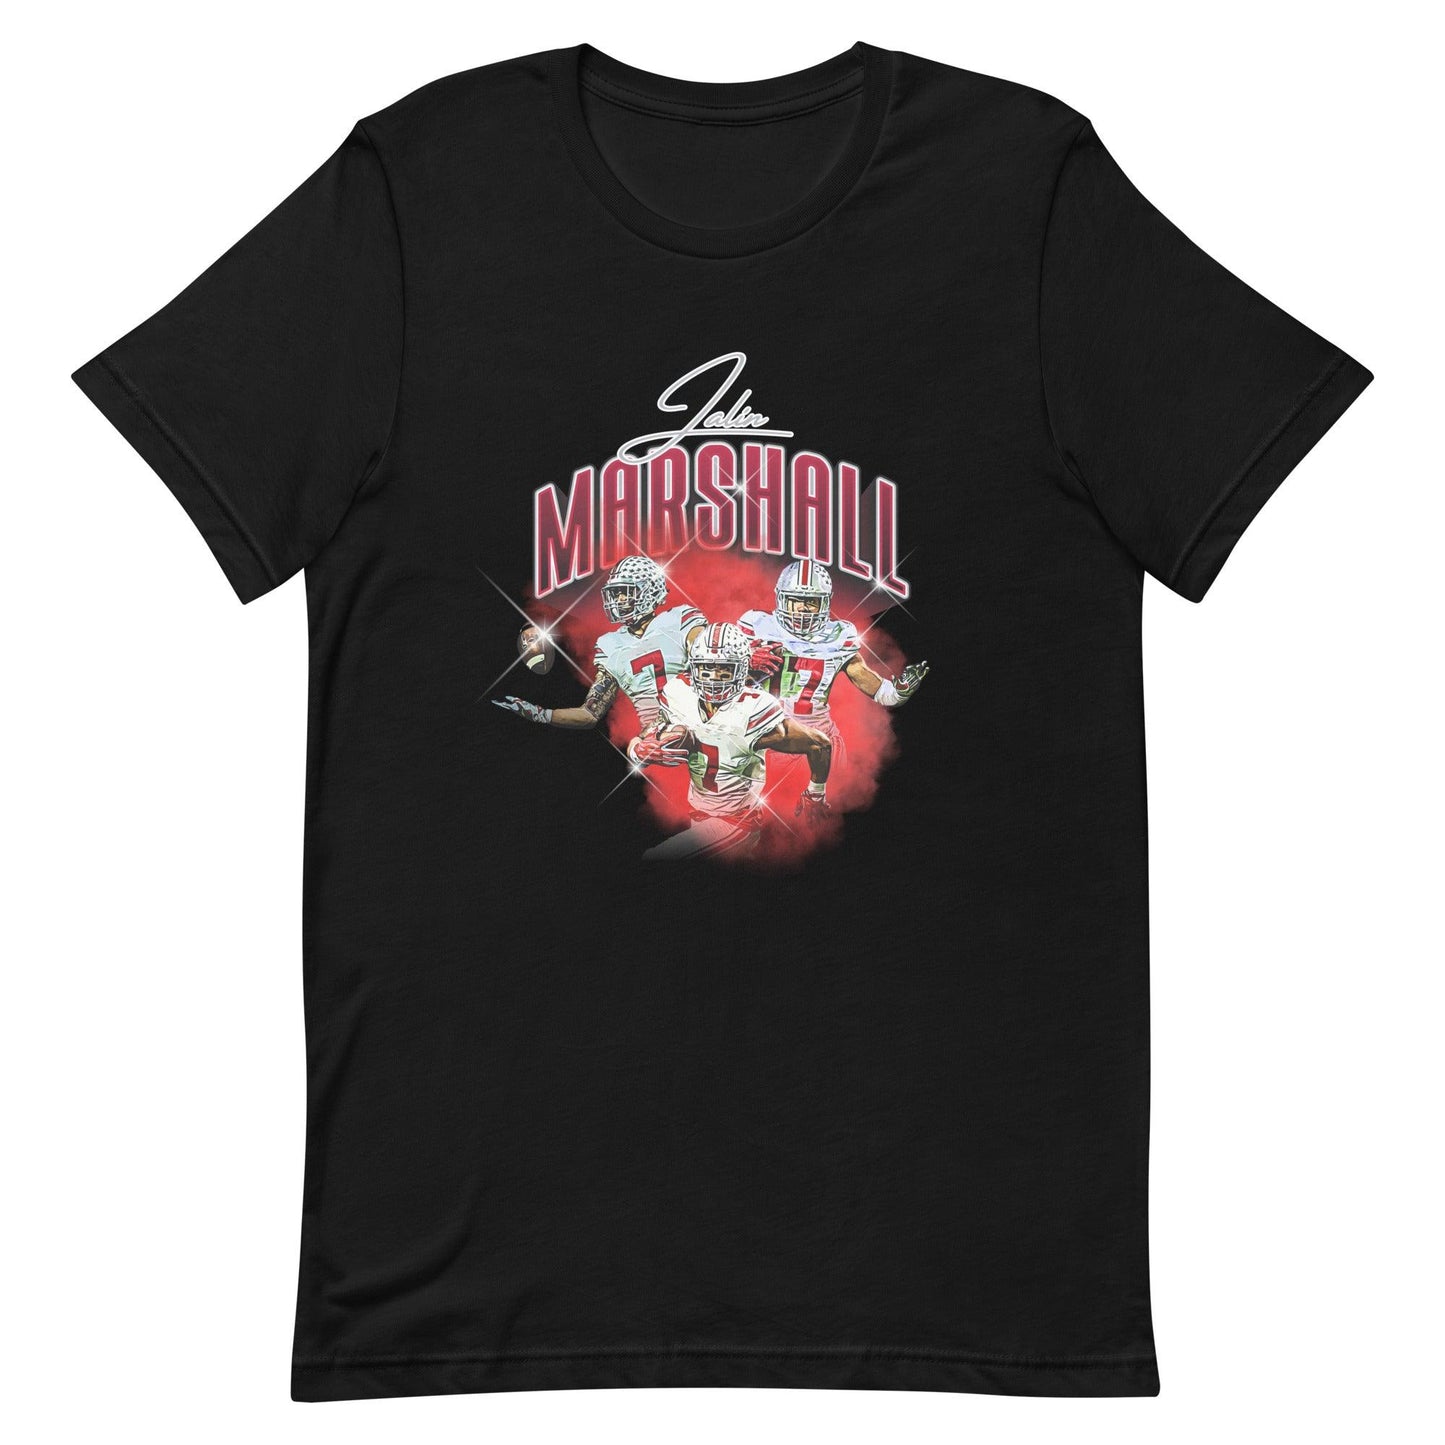 Jalin Marshall "Vintage" t-shirt - Fan Arch